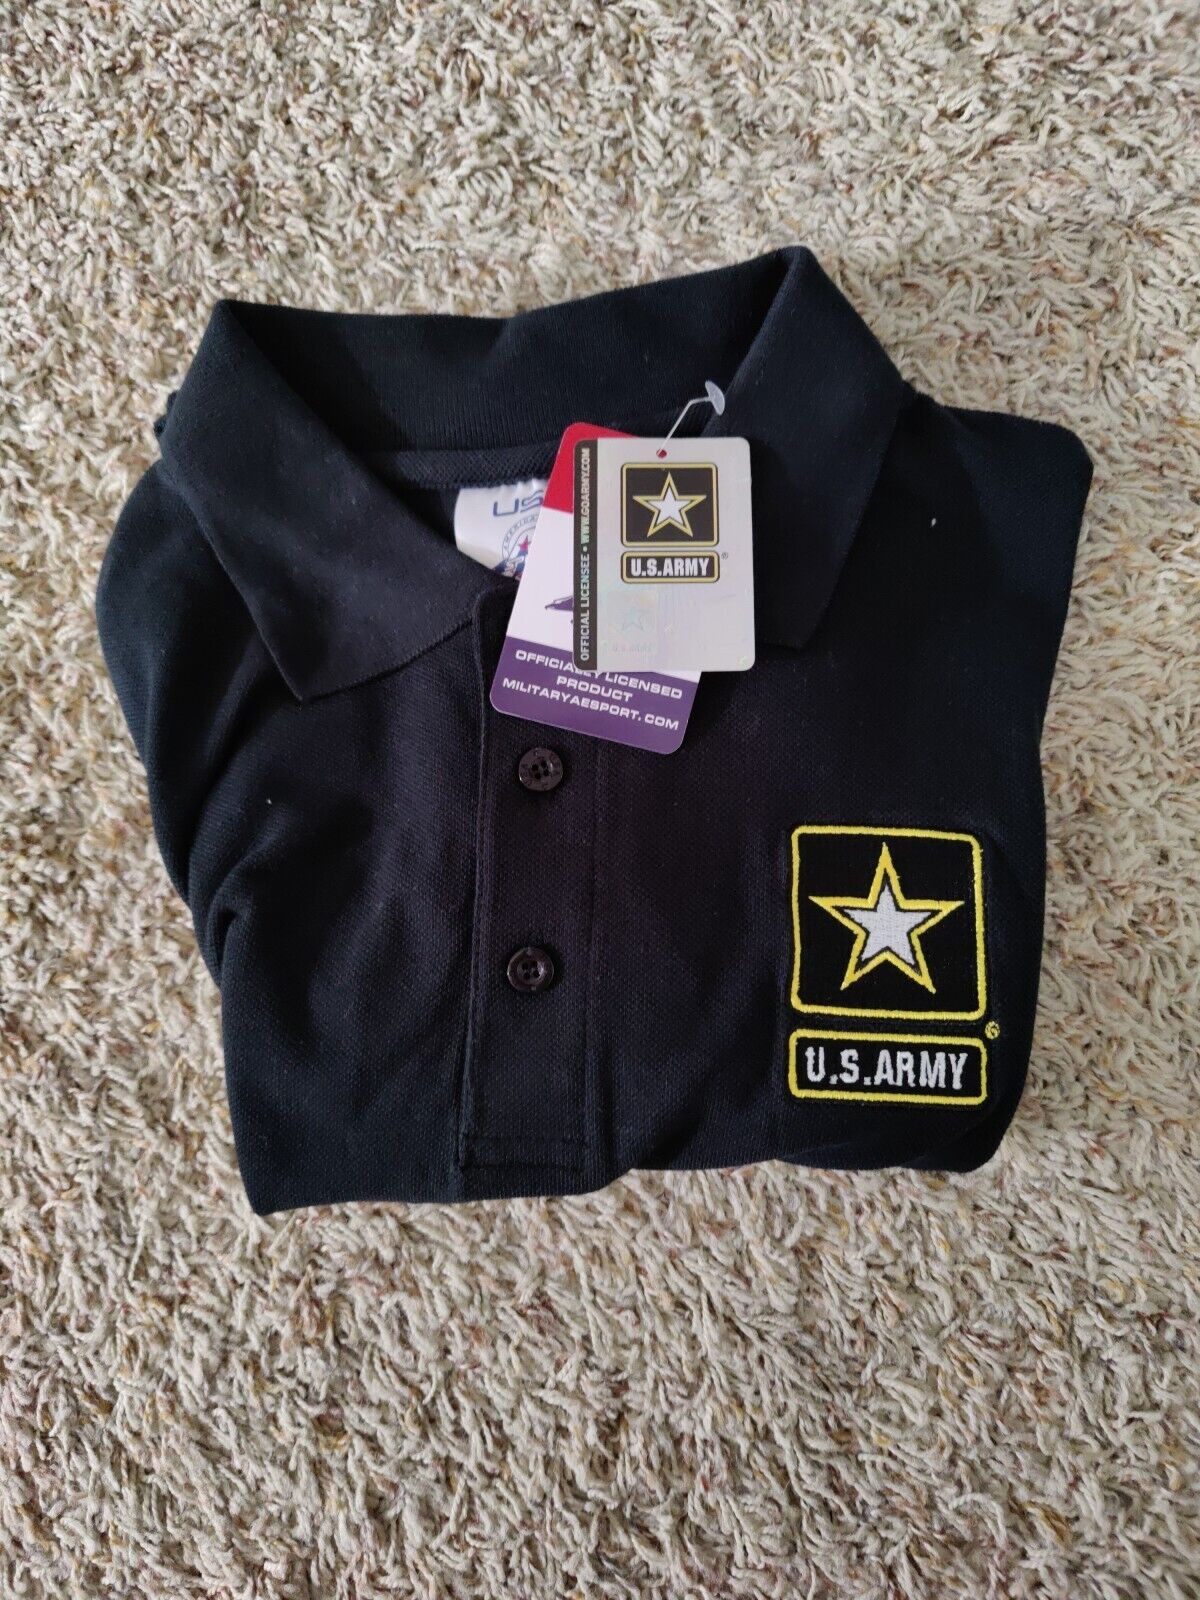 U.S. Army Black Polo Shirt Size Large  (Brand New)